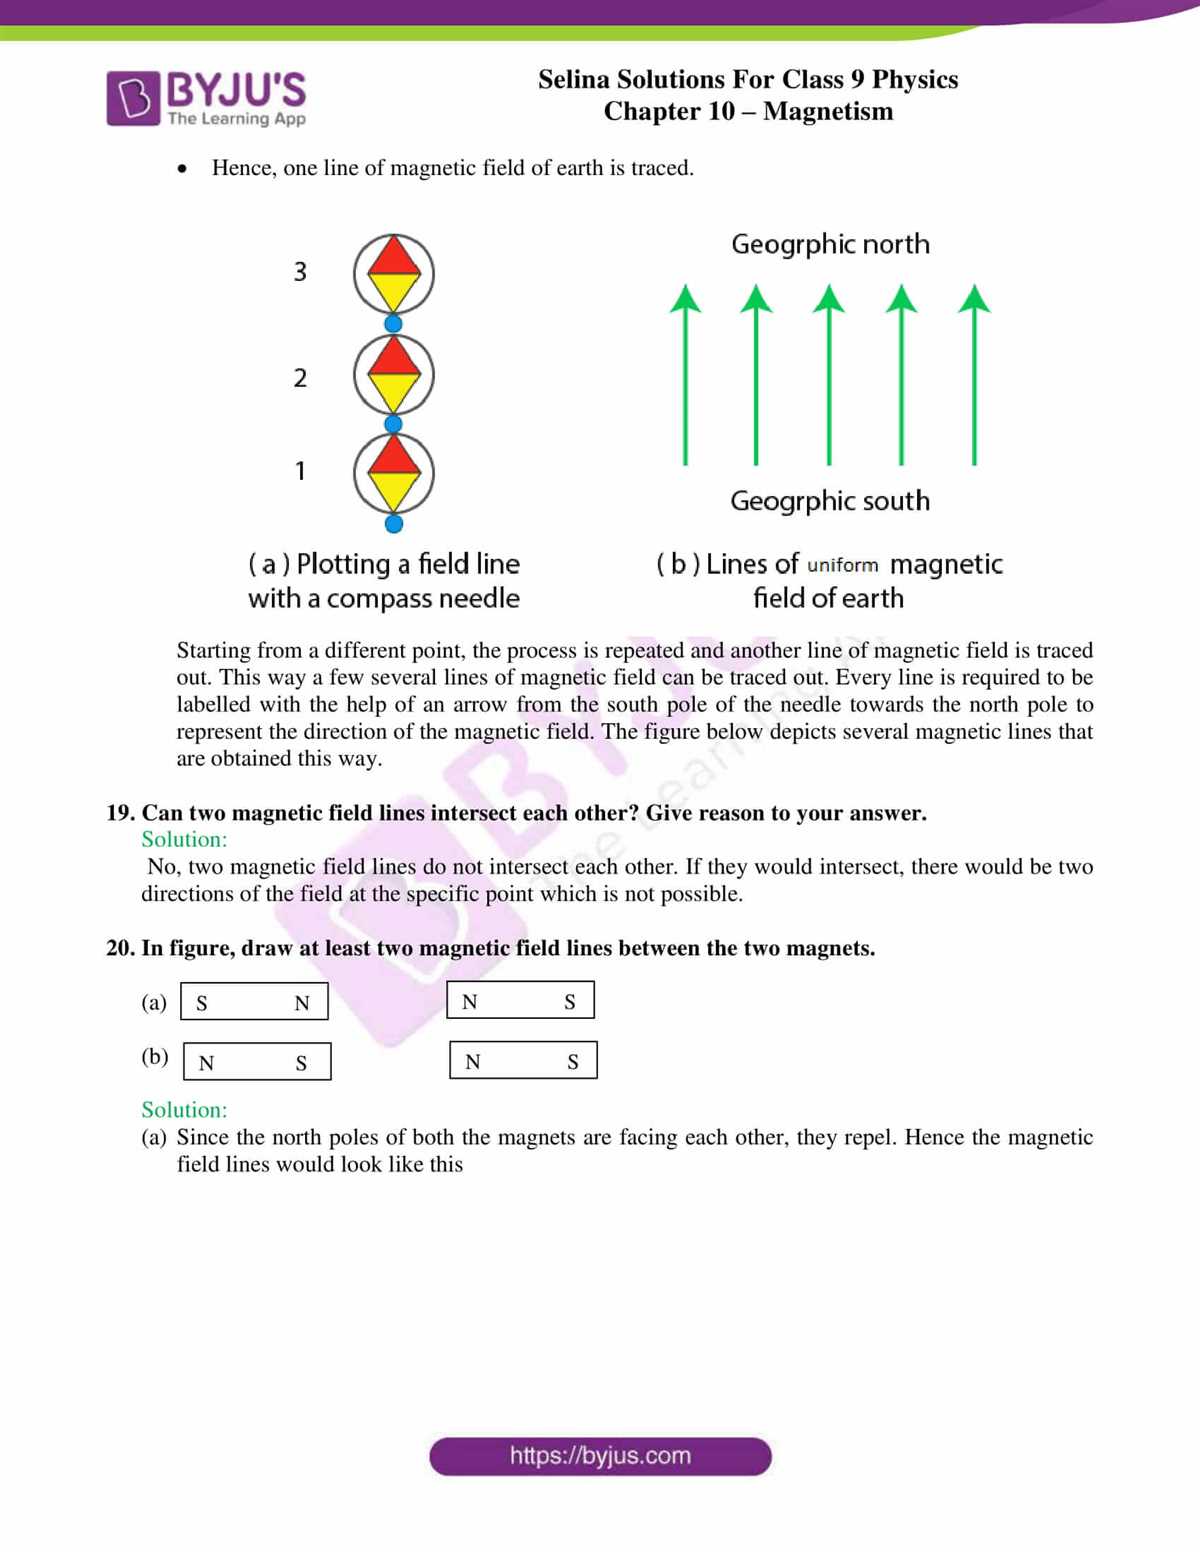 Properties of Electromagnetic Waves